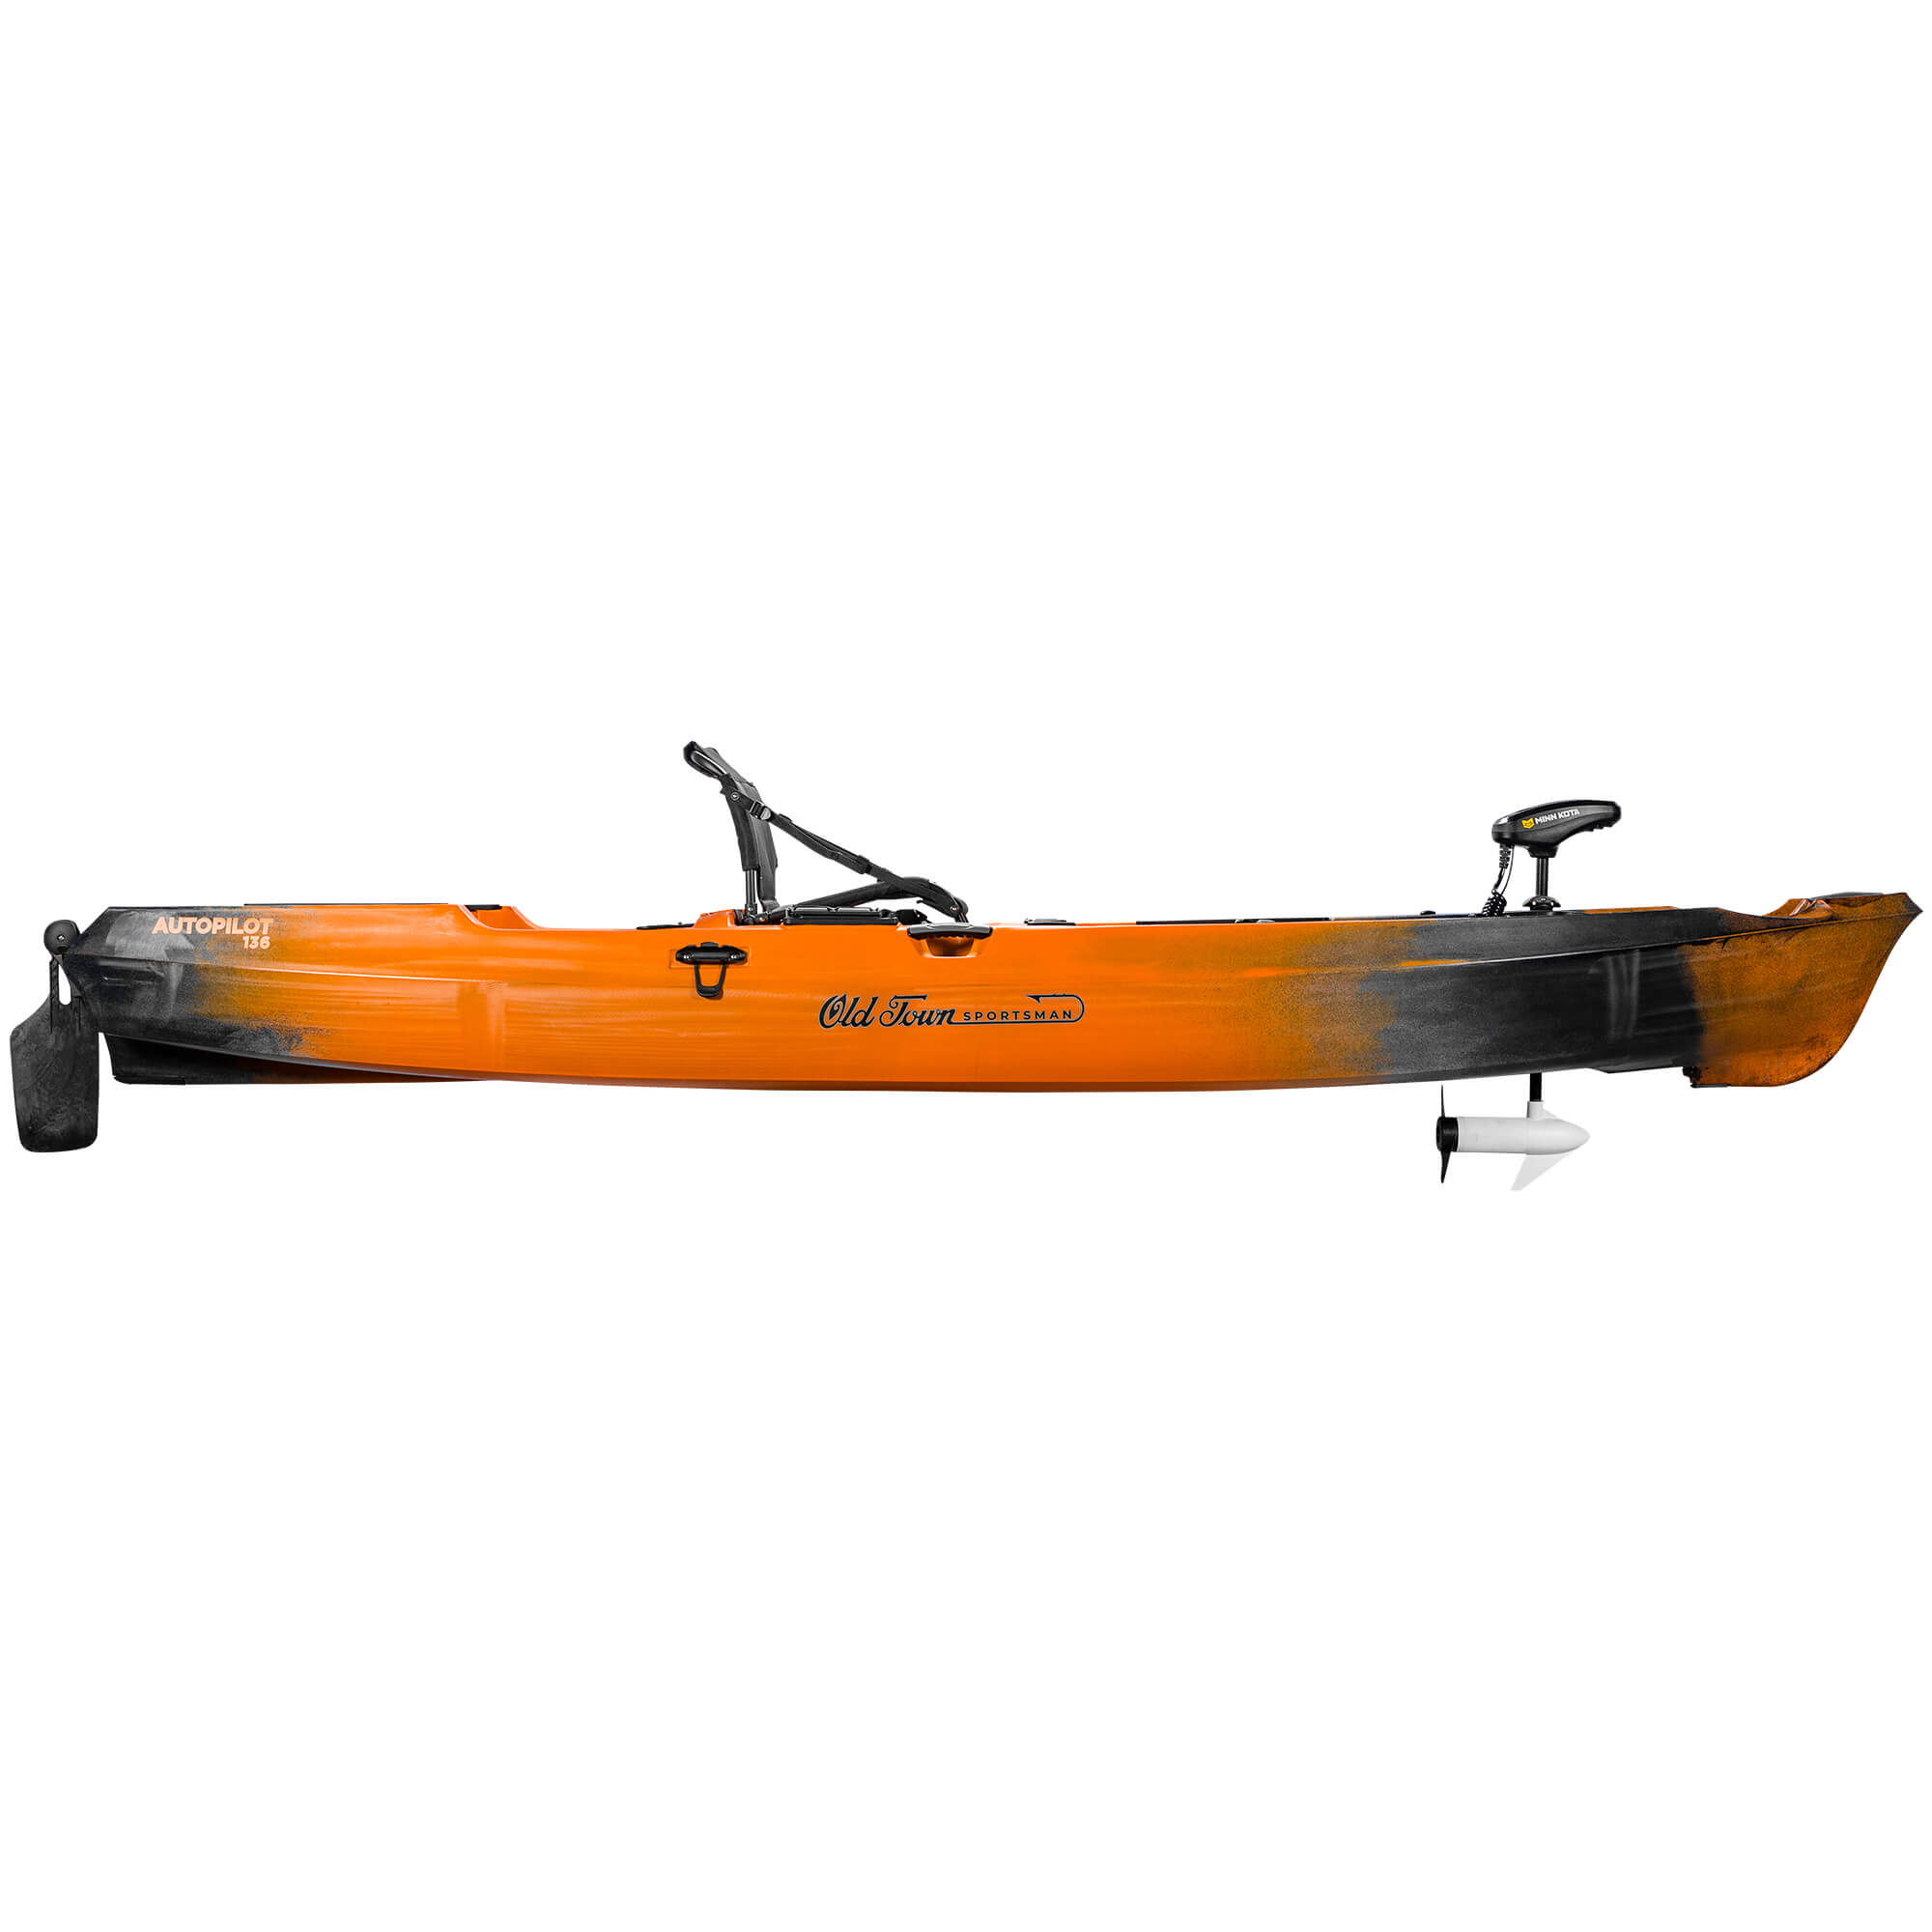 Old Town Sportsman AutoPilot 120 Sit-on-Top Kayak with Minn Kota